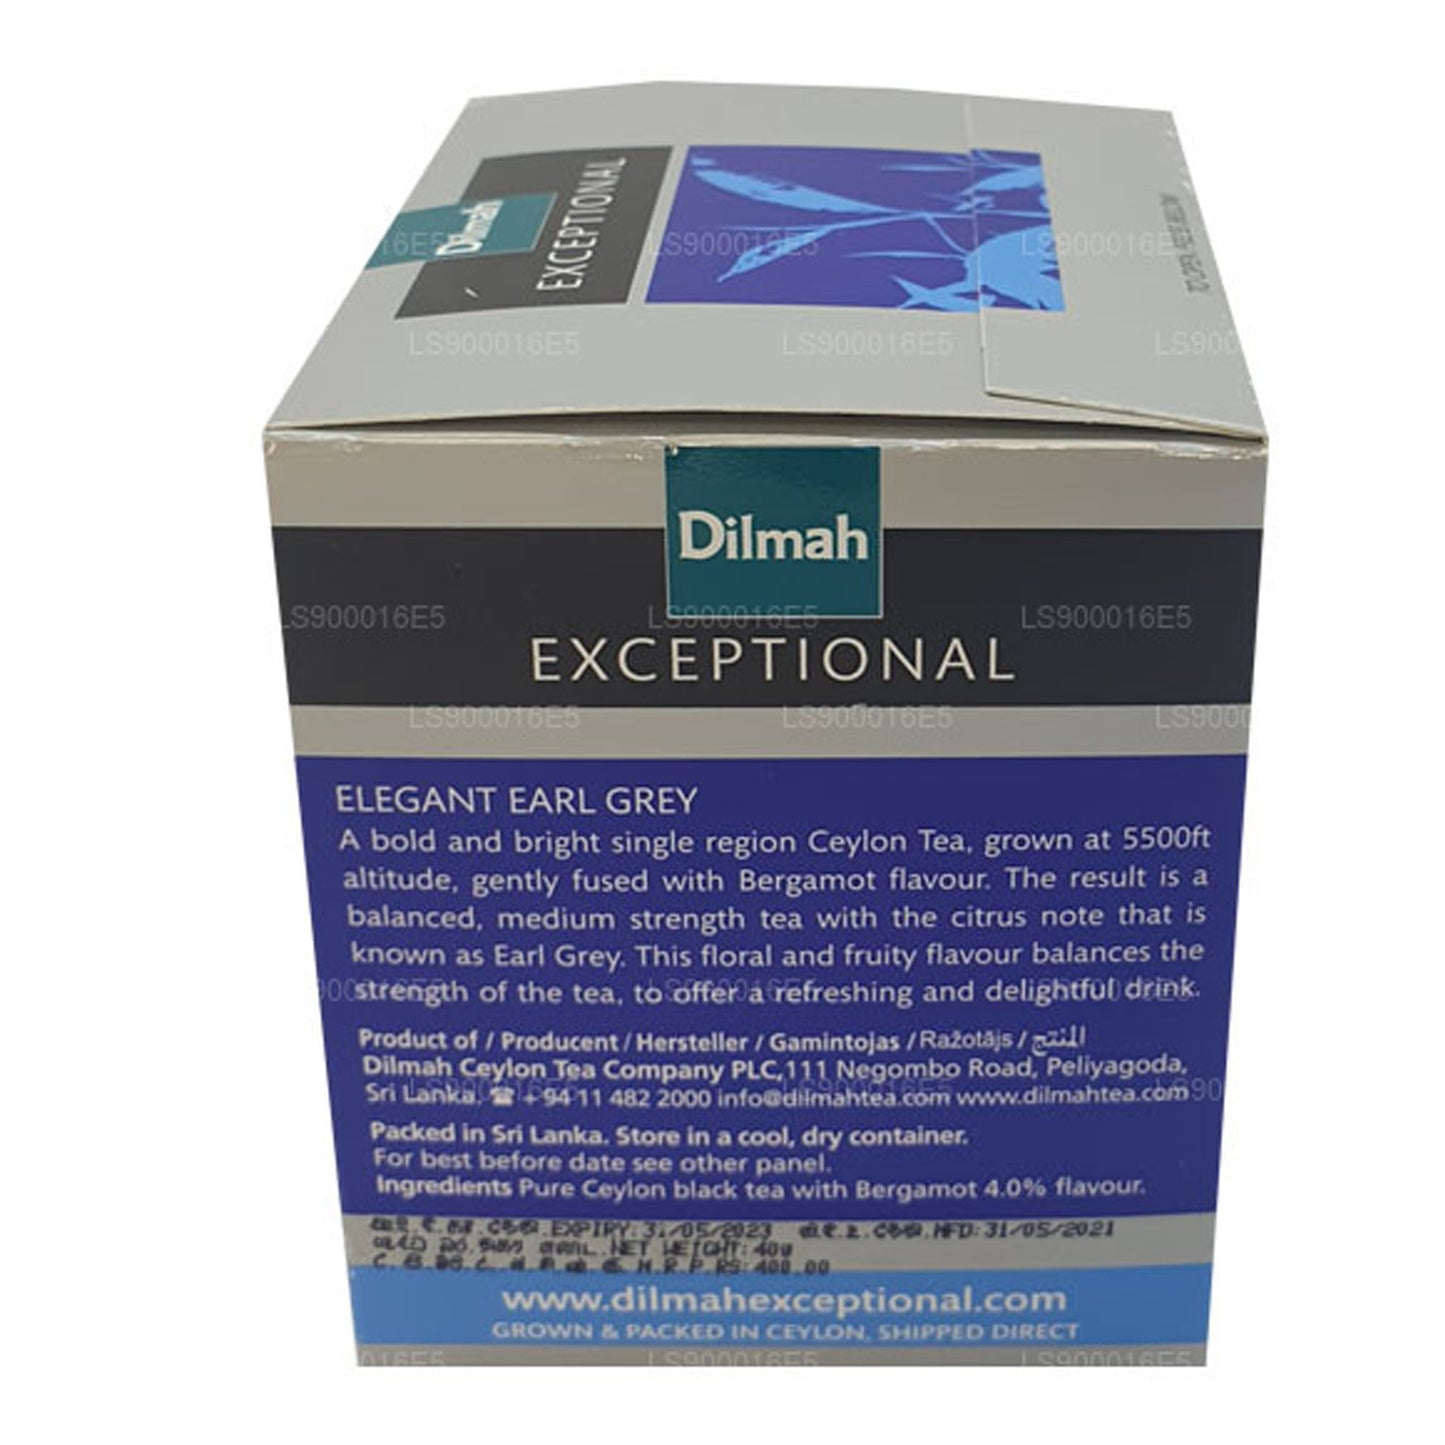 Dilmah Exceptional Elegant Earl Grey Prawdziwa herbata liściasta (40g) 20 torebek